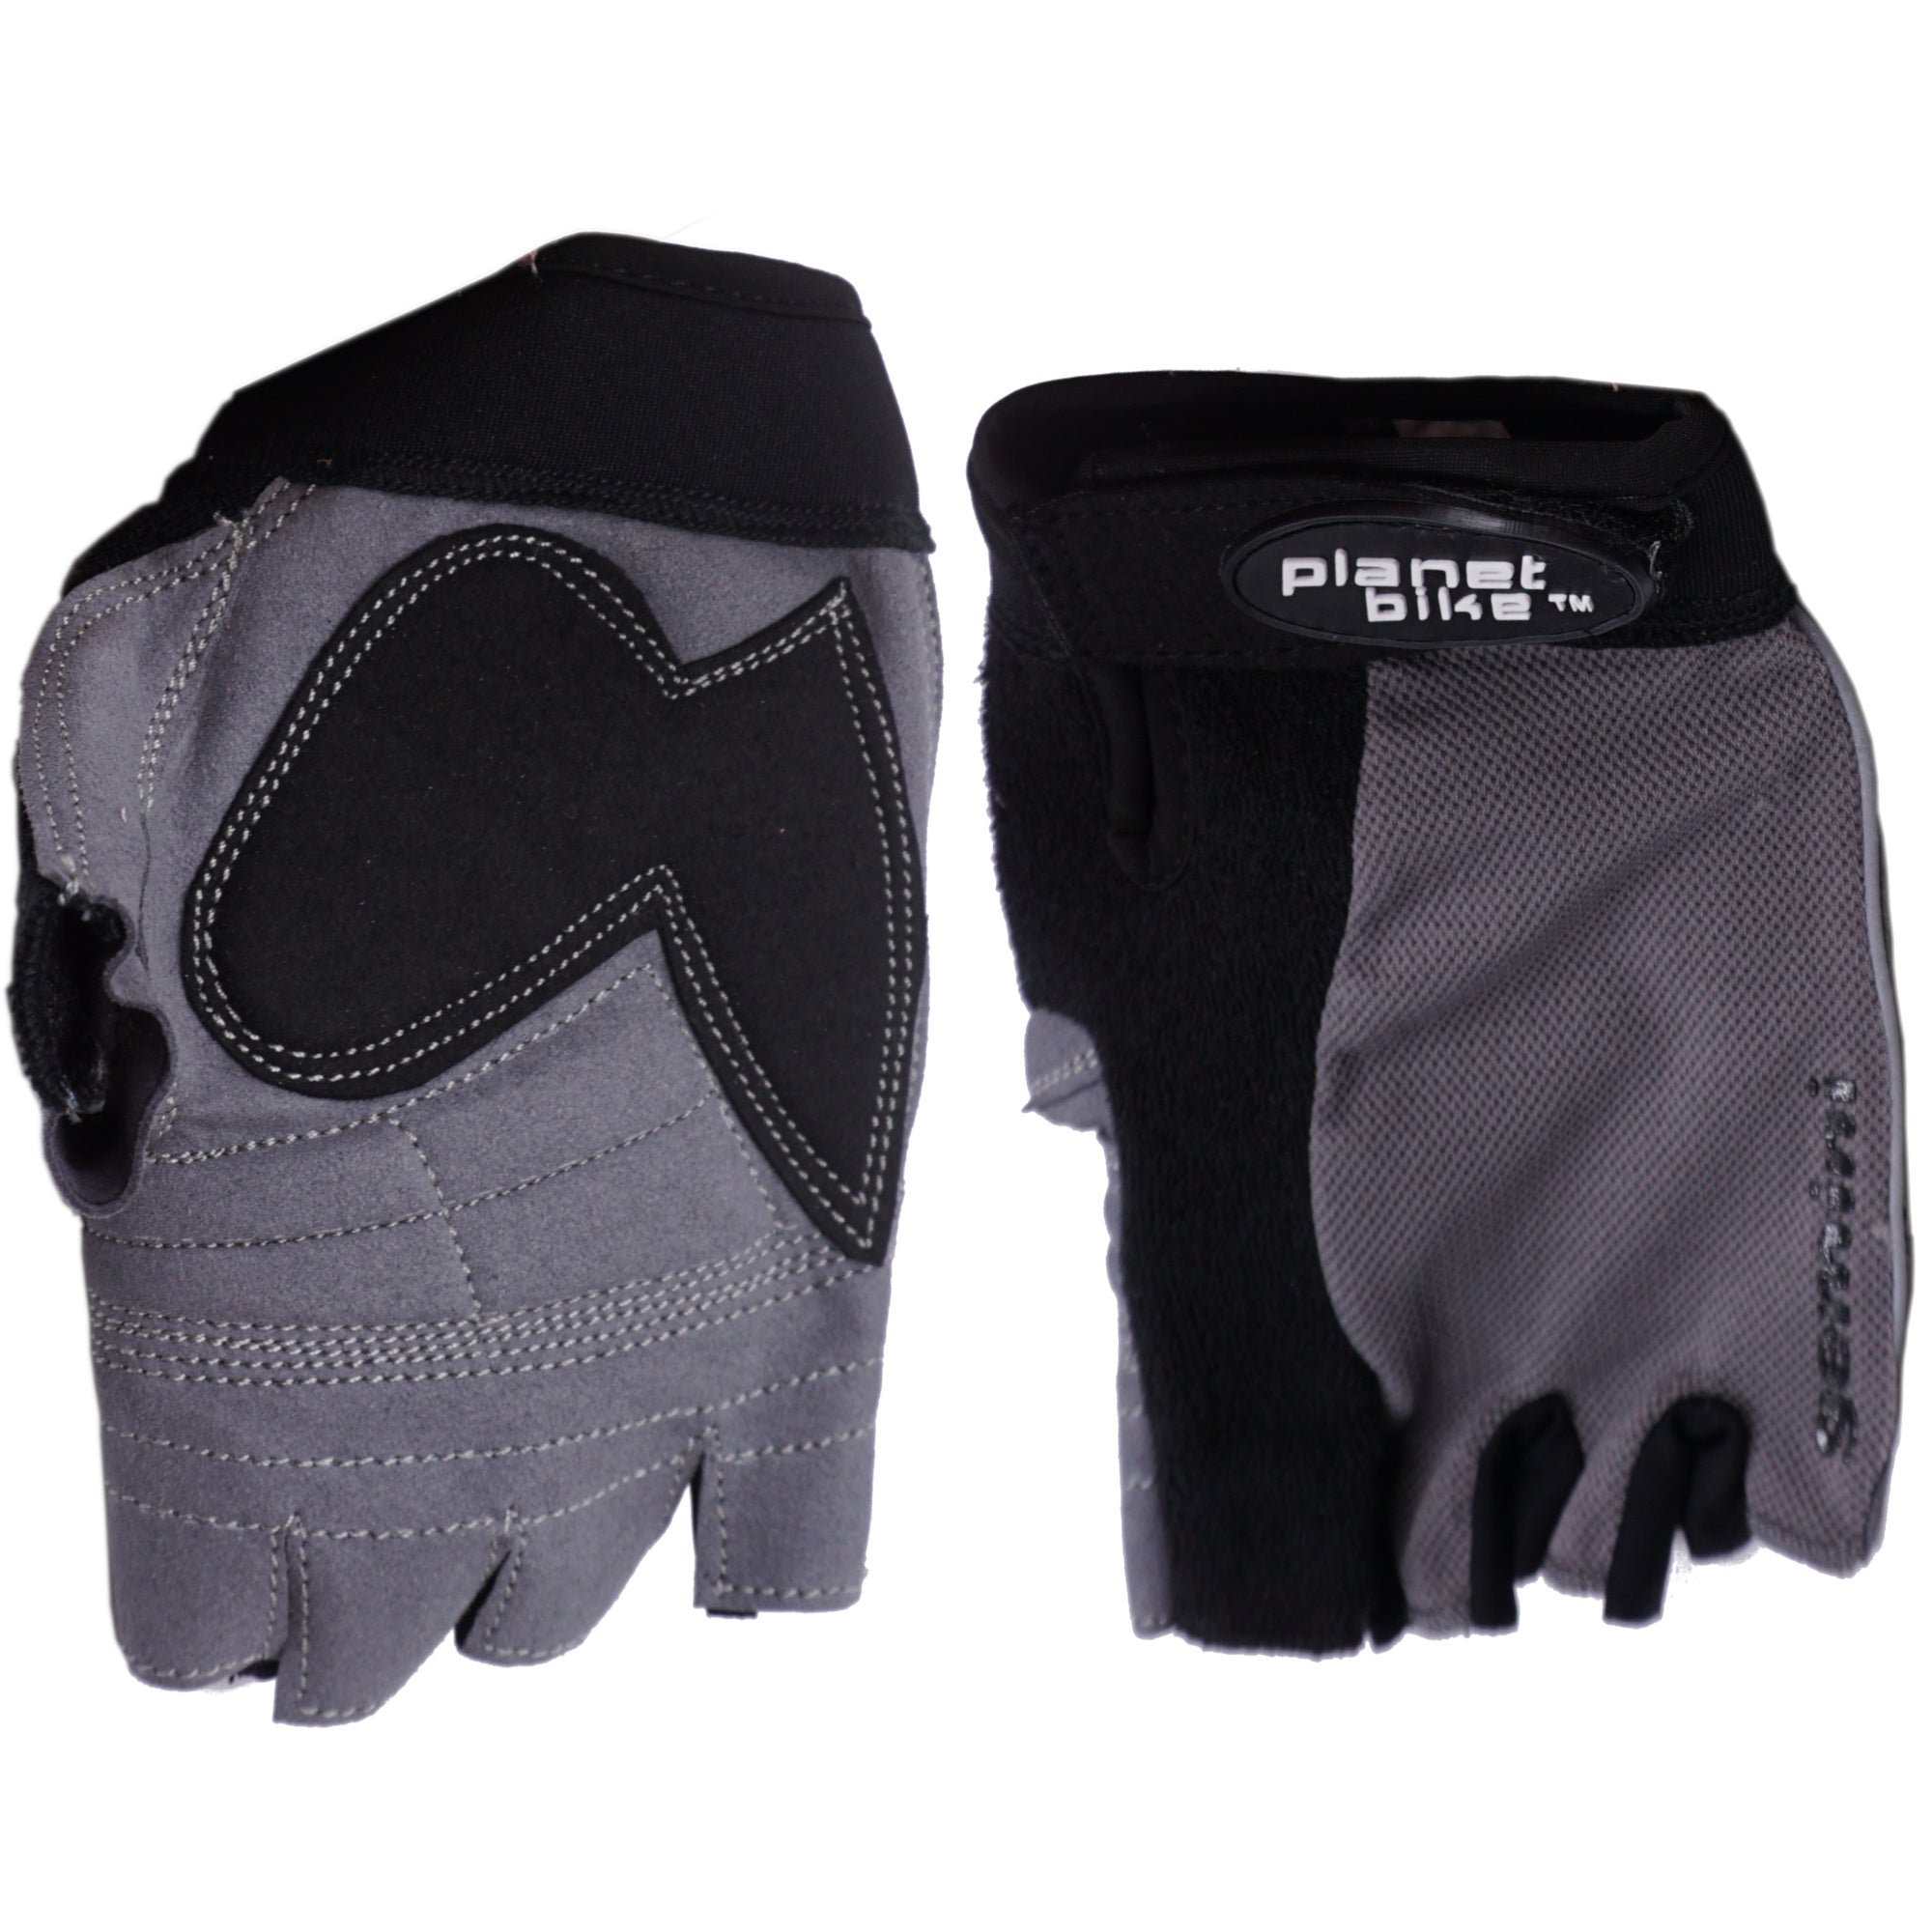 Planet Bike Gemini Gel Glove, Black/Gray - The Bikesmiths